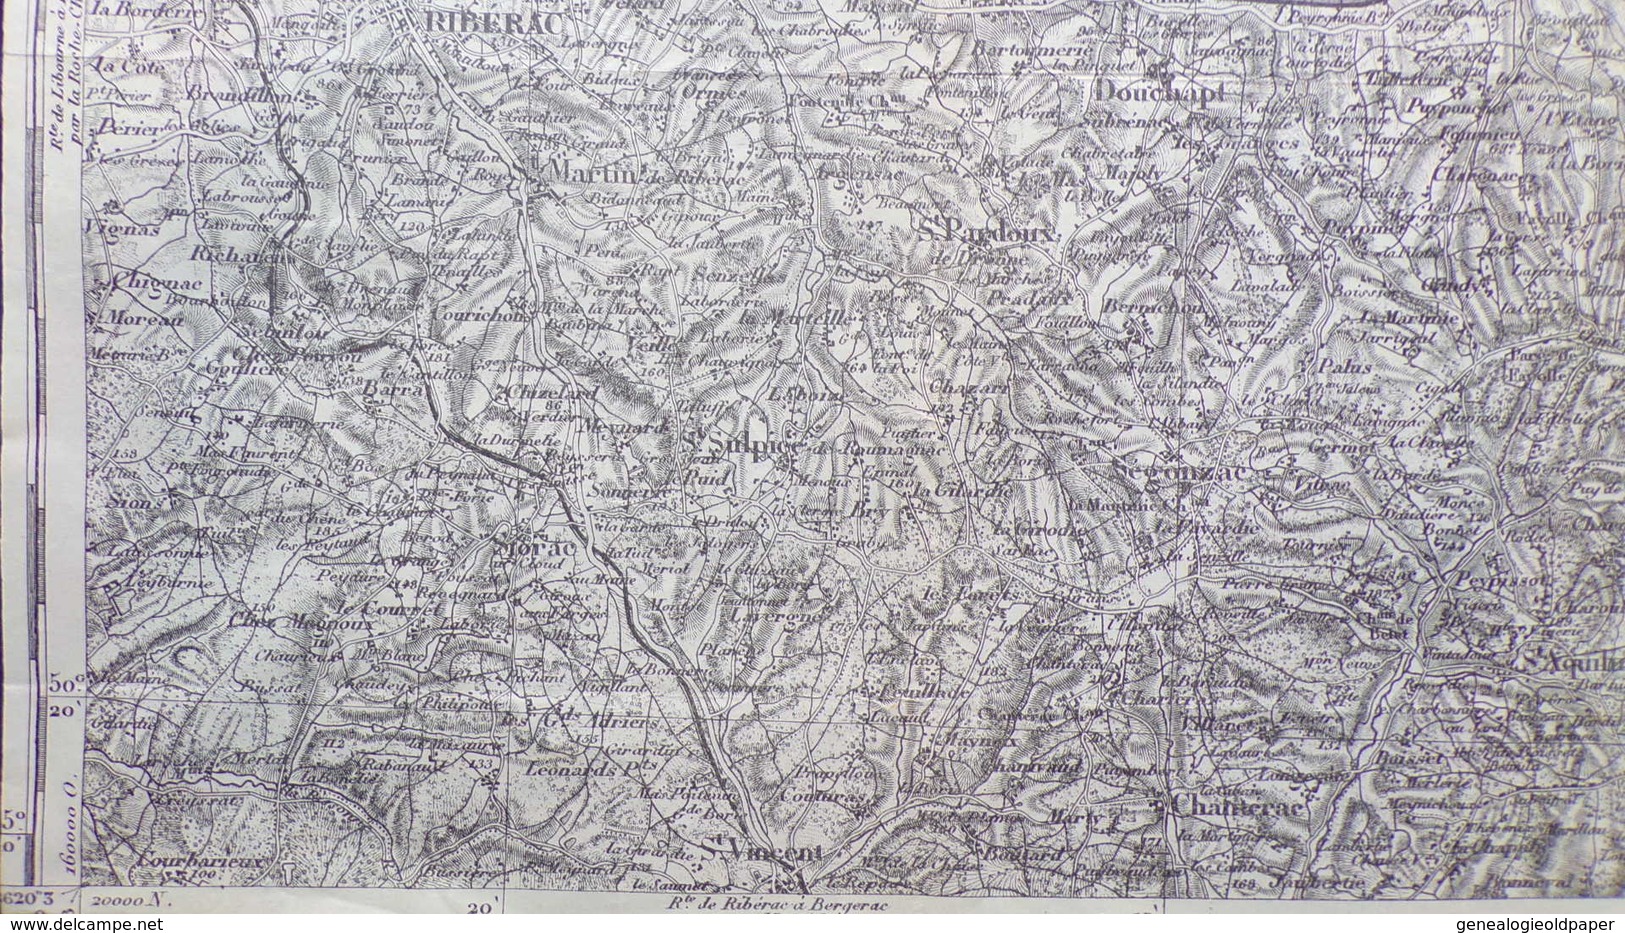 24- RARE CARTE 1909- RIBERAC-DOUCHAPT-ALLEMANS-CHAPDEUIL-MARSAC-SAINT AQUILIN-BOURDEILLES-MENSIGNAC-SIORAC-LUSIGNAC - Topographische Kaarten